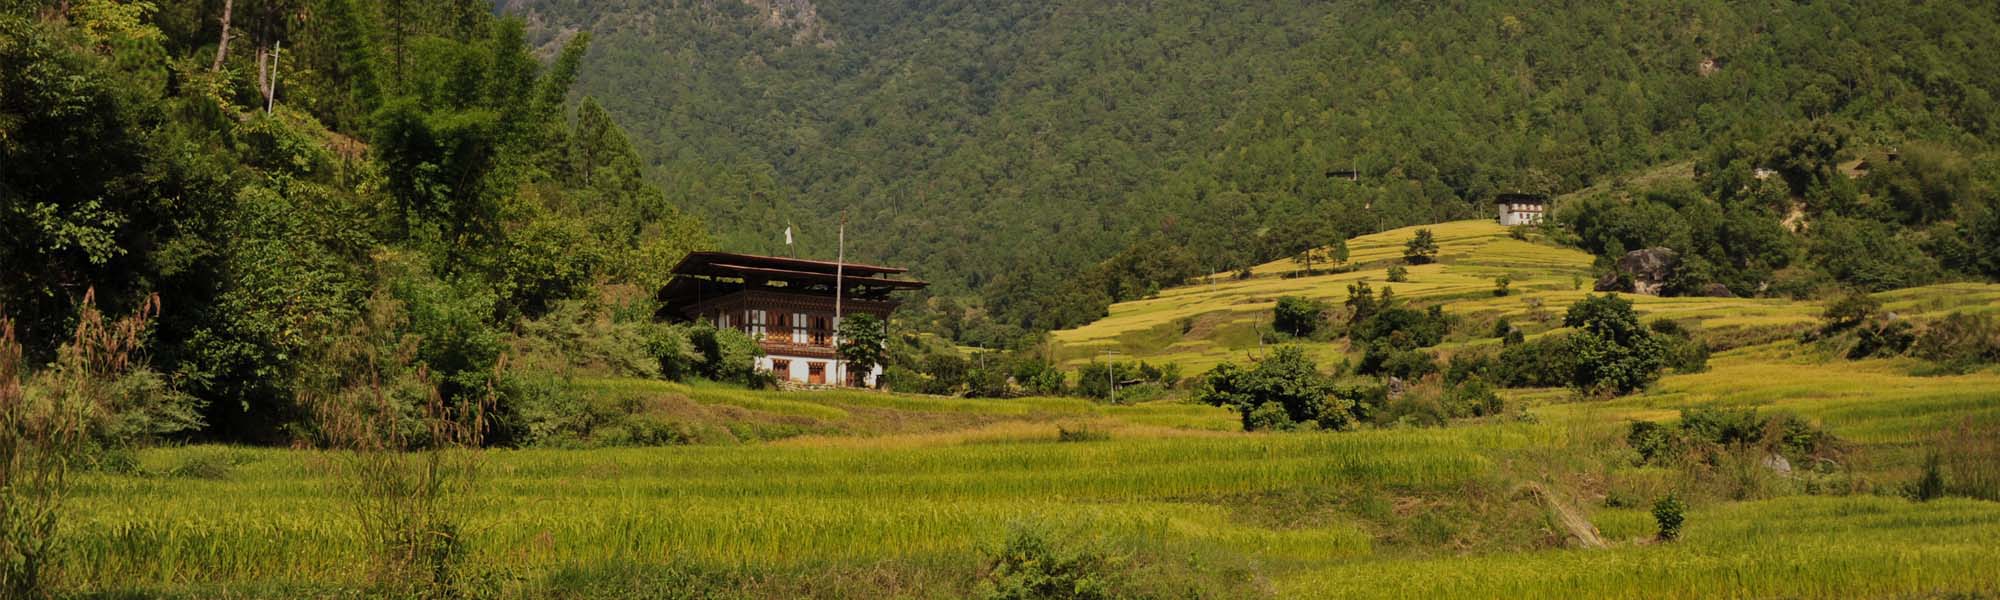 How can I Process my Bhutan Visa?